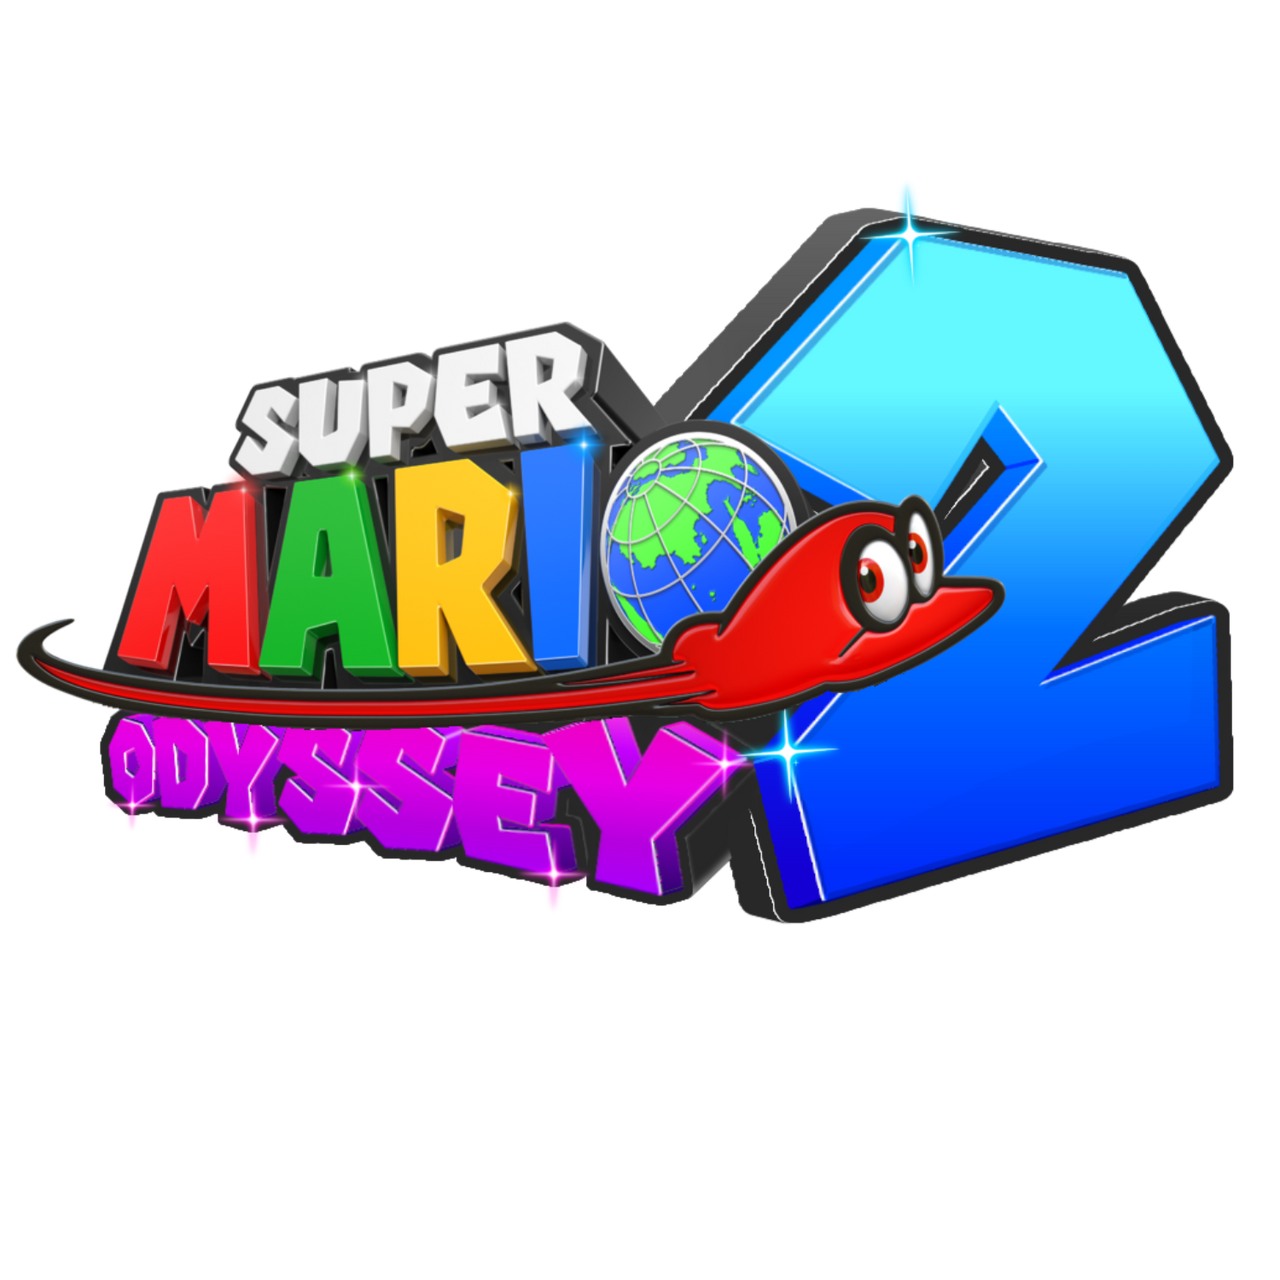 Super Mario Odyssey 2: The Elder Moons, Fantendo - Game Ideas & More